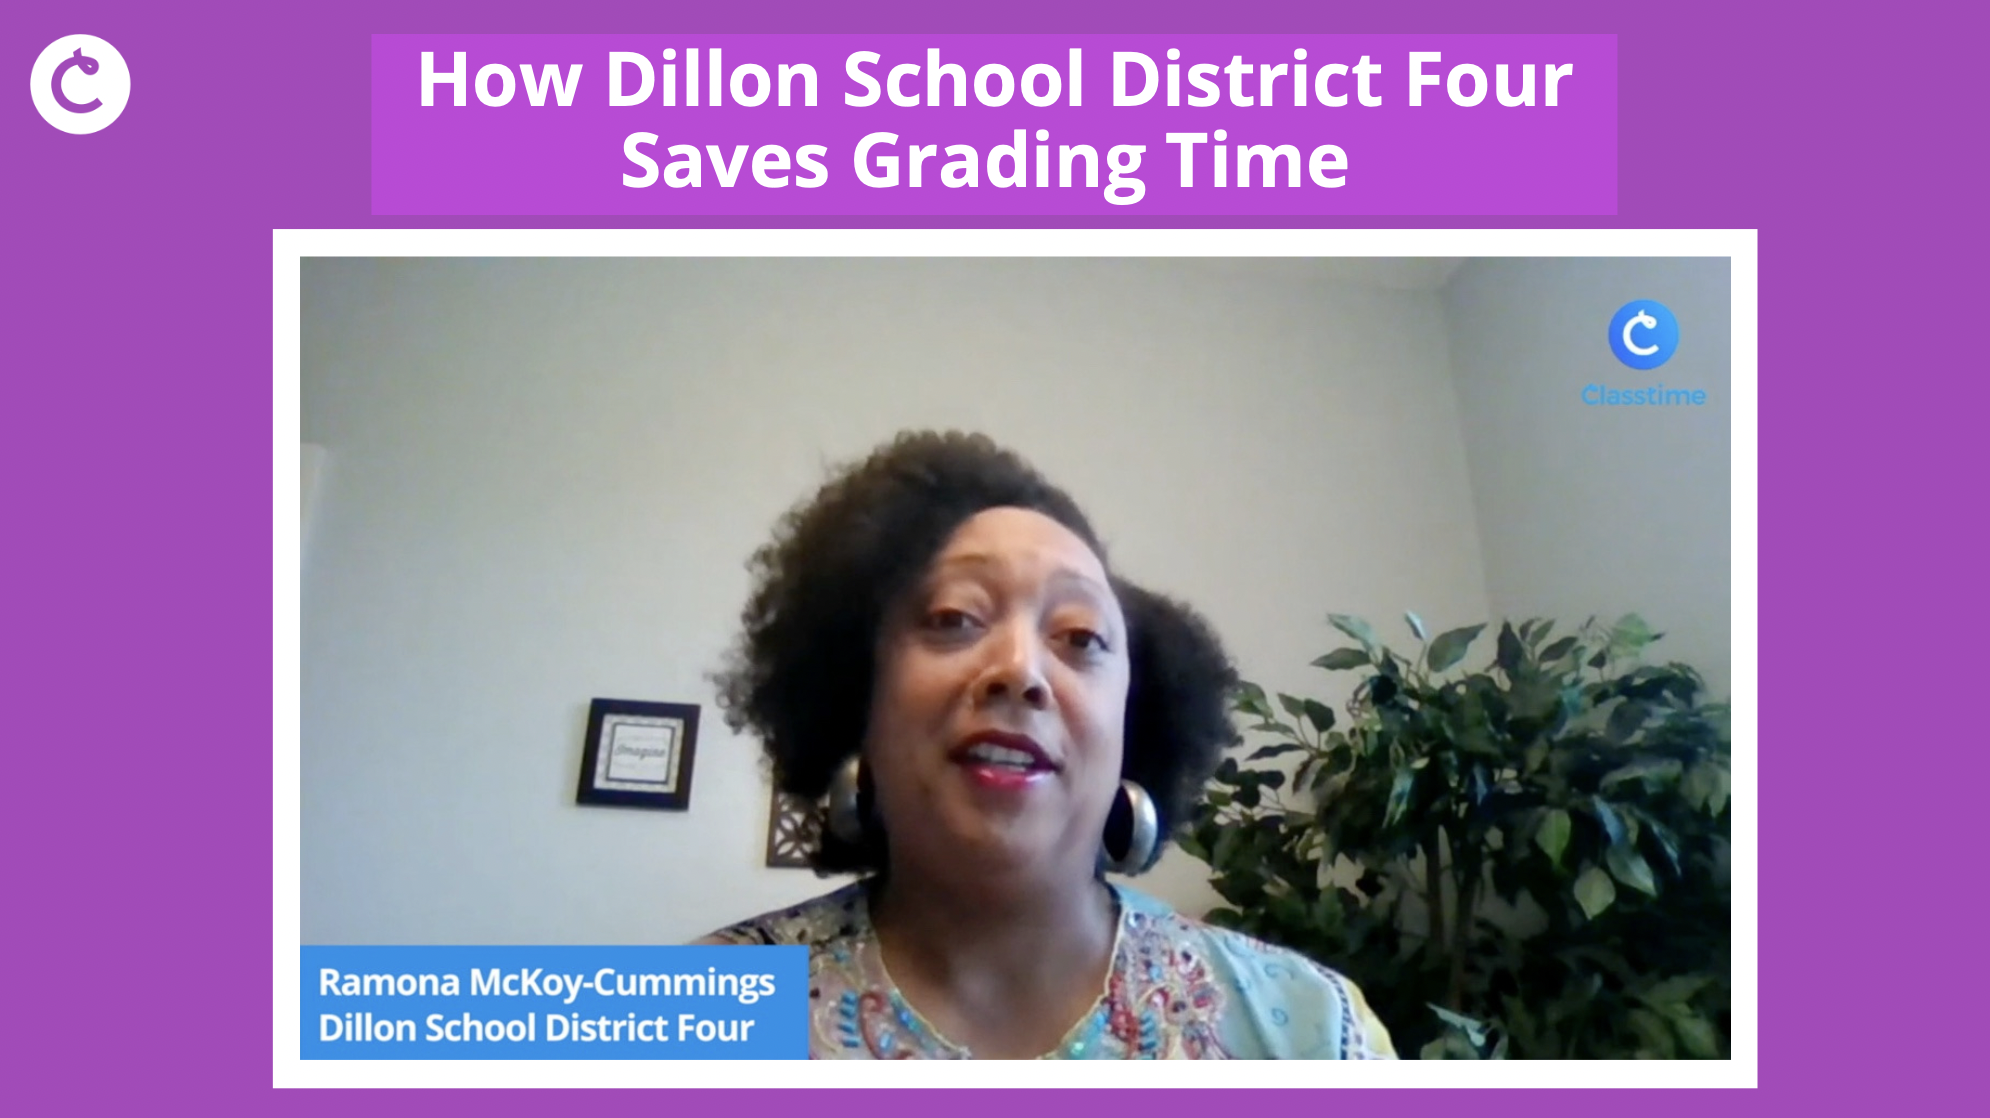 How Dillon School District Four Educators Save Time Grading